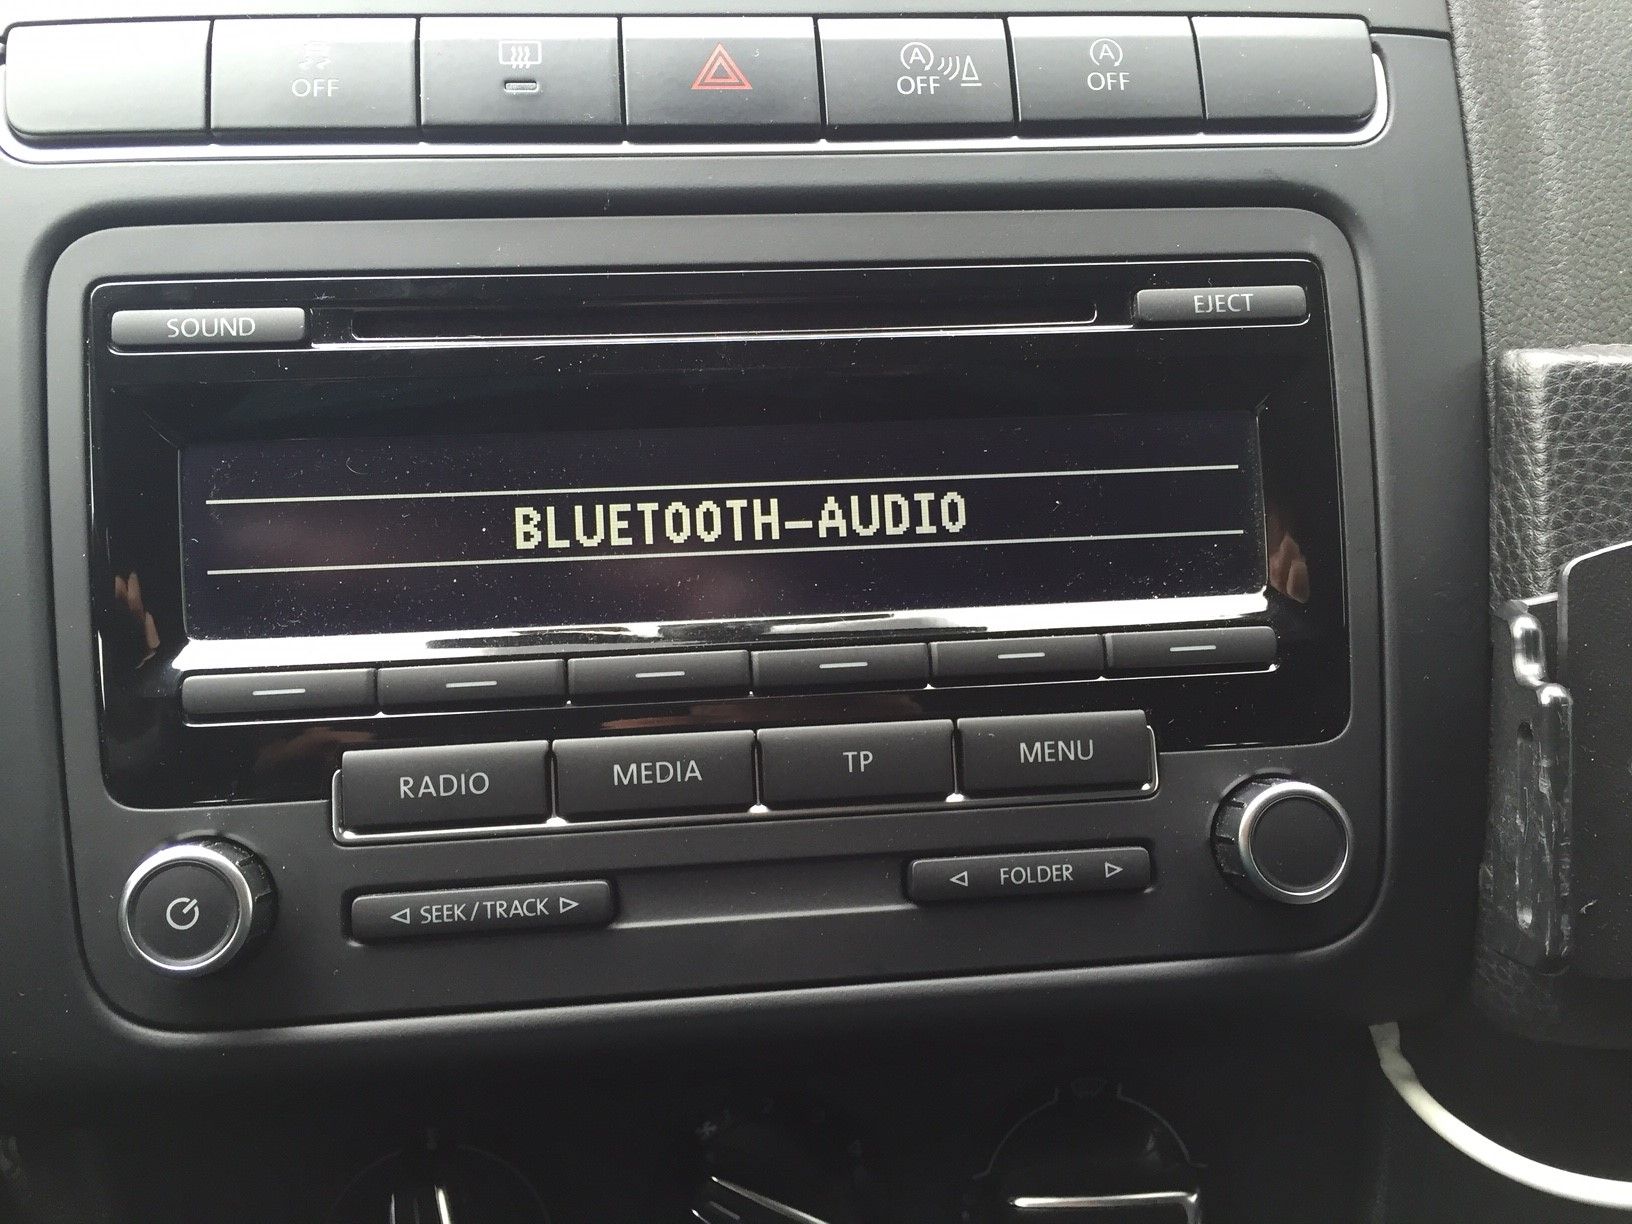 Bluetooth Audio optie in Media selectie